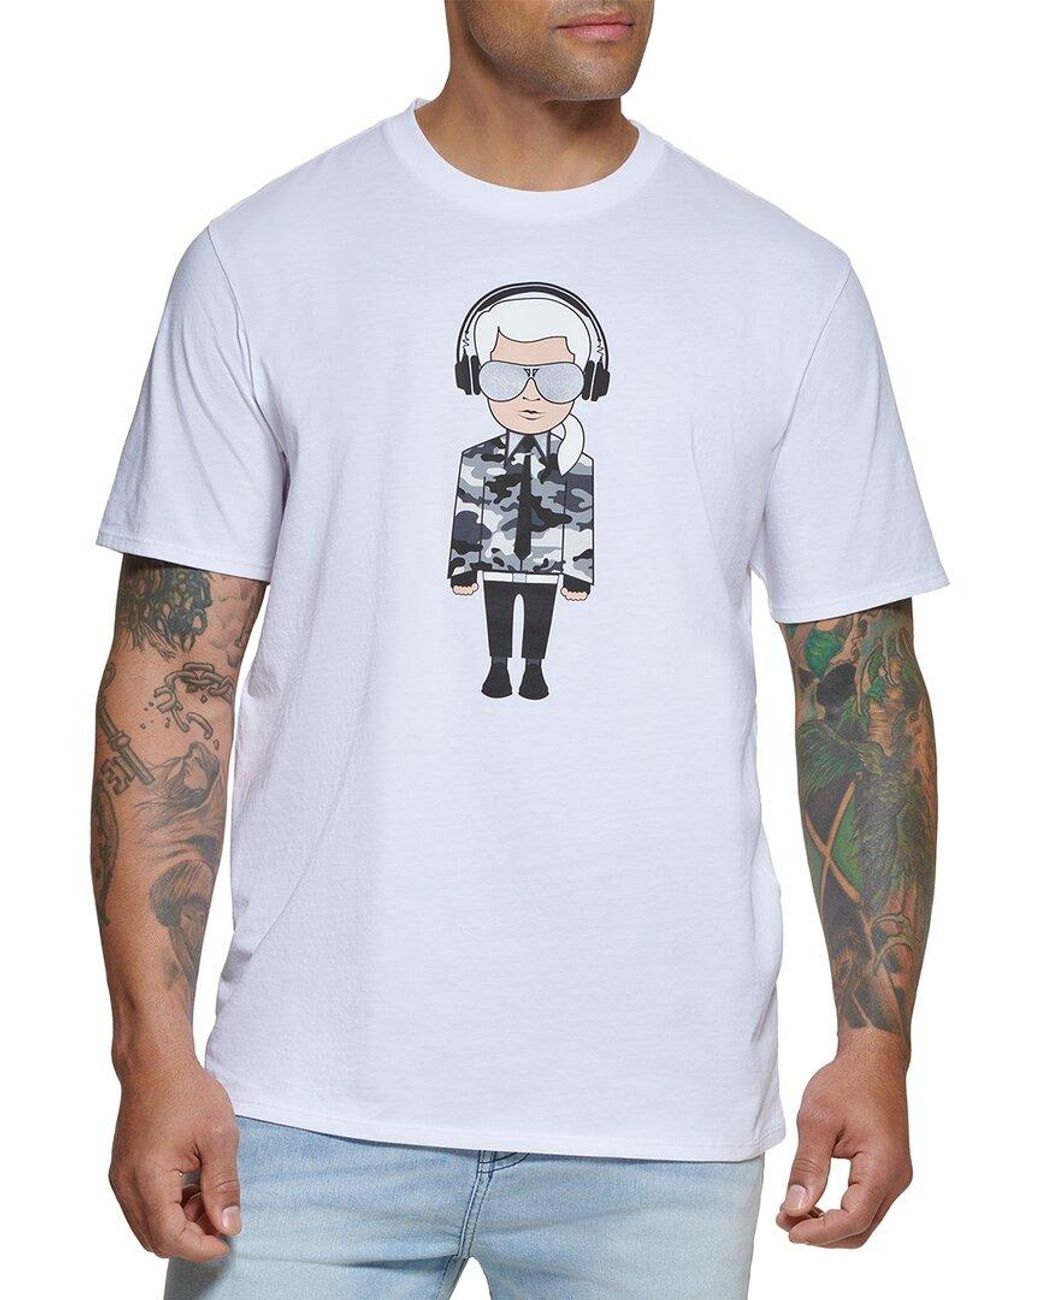 3XL INSTO T-Shirt Mode 3D Drucken Kurz Ärmel T-Stück Karl Lagerfeld Gedruckt Unterhemd Unisex Einfach Wild A1 